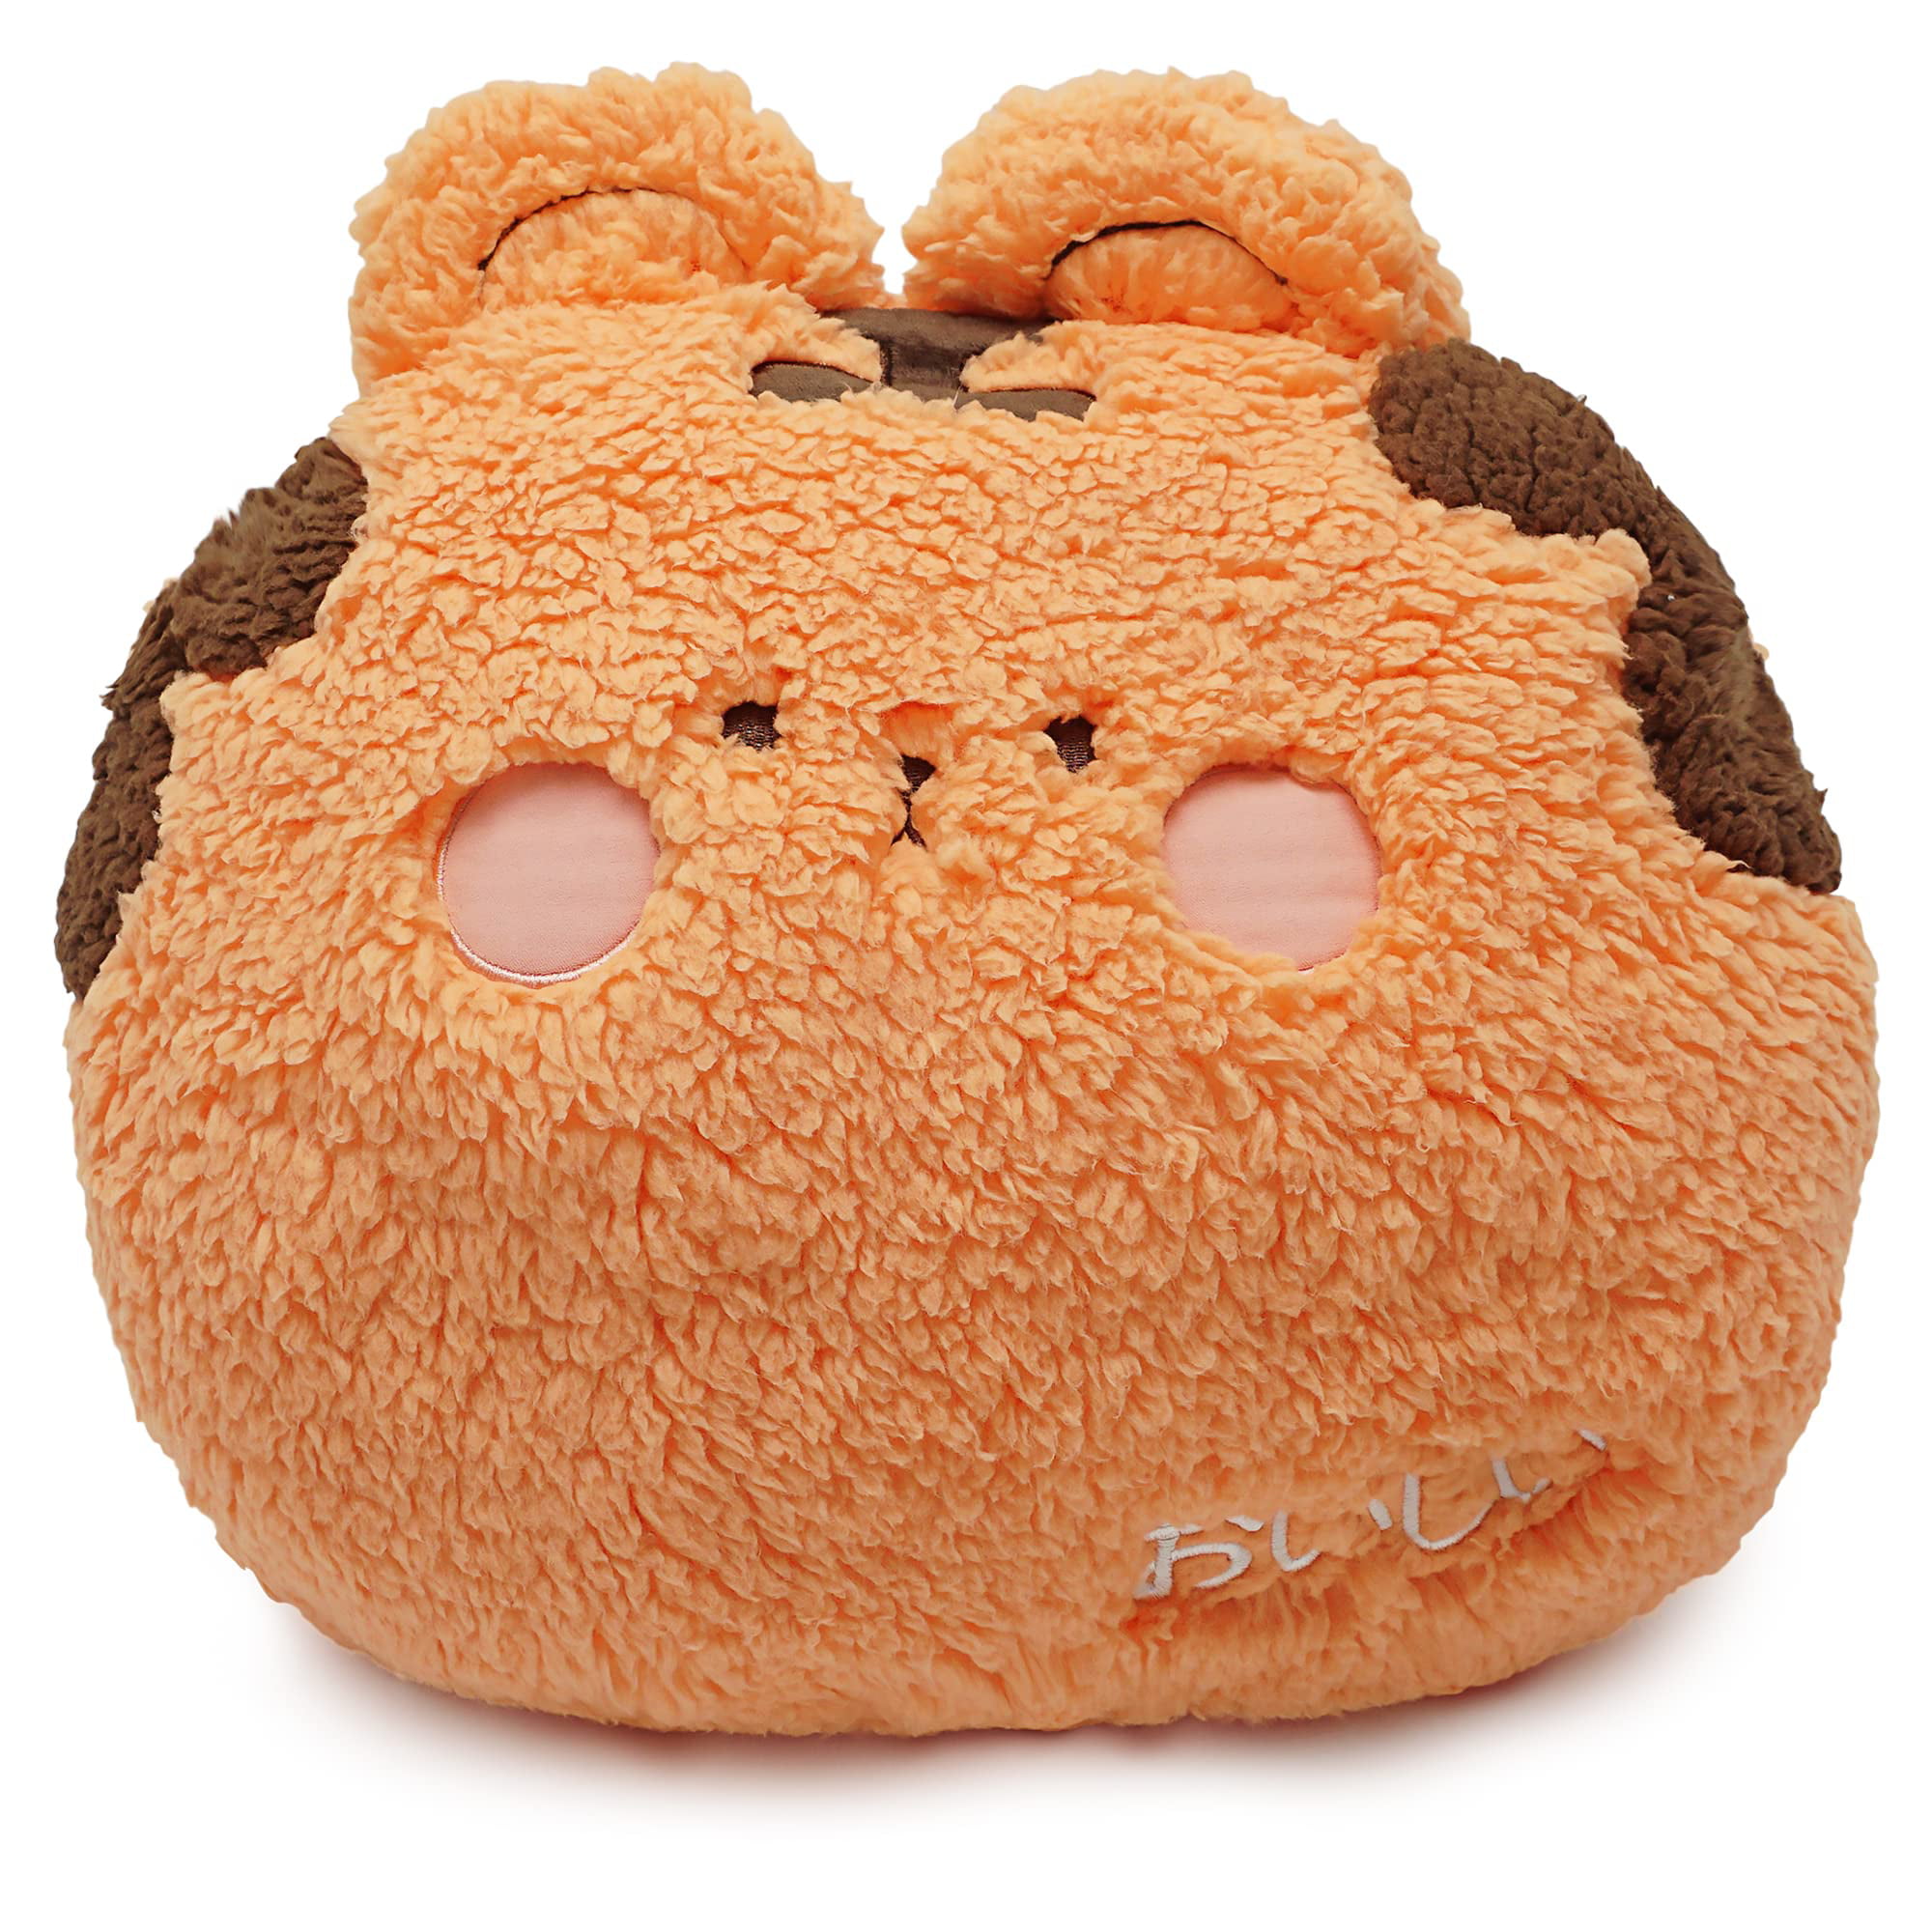 Adorable Plush Bear Cuddle Cushion Pillow for Kids Super Soft Bear Stuffed Animal Onsoyours Teddy Bear Plush Pillow 